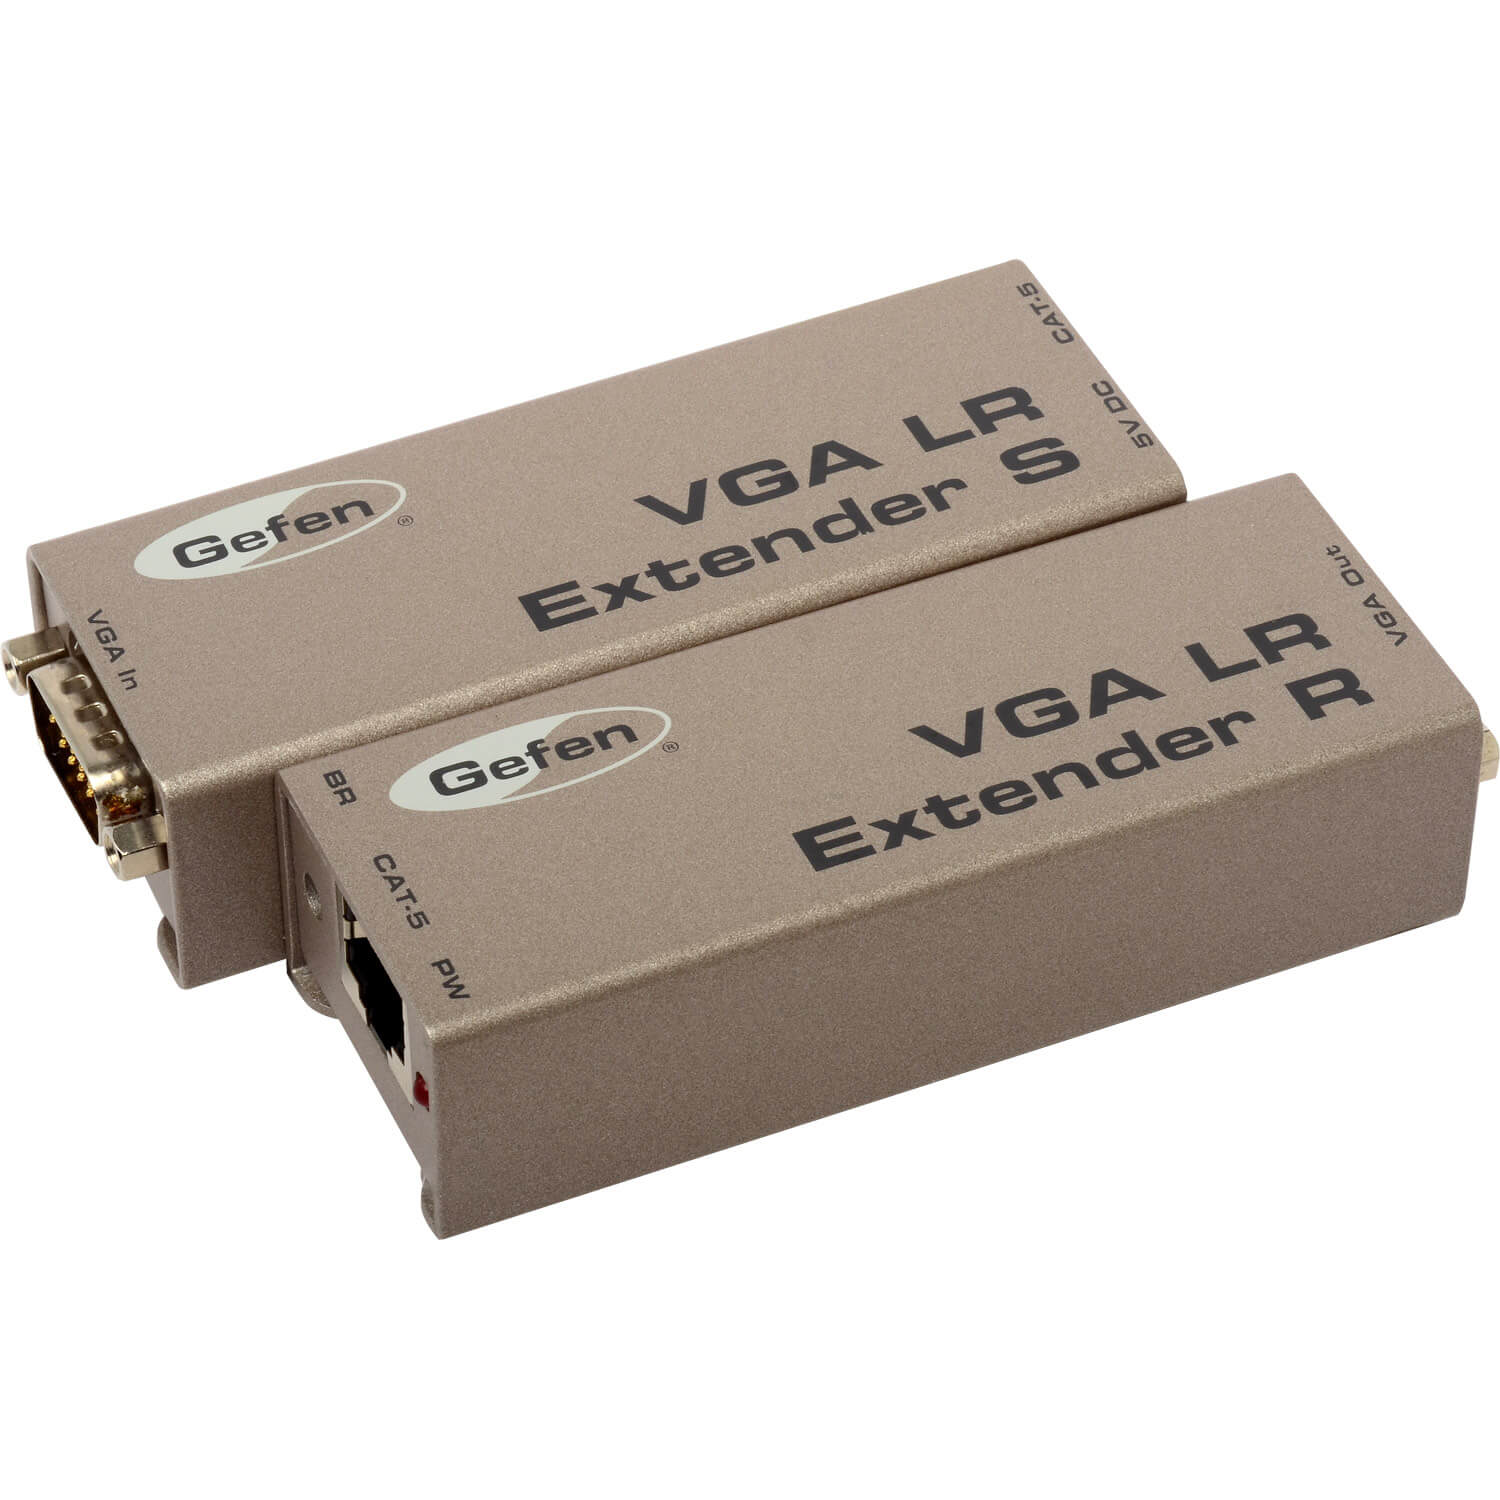 Gefen EXT-VGA-141LR Extensor vga lr